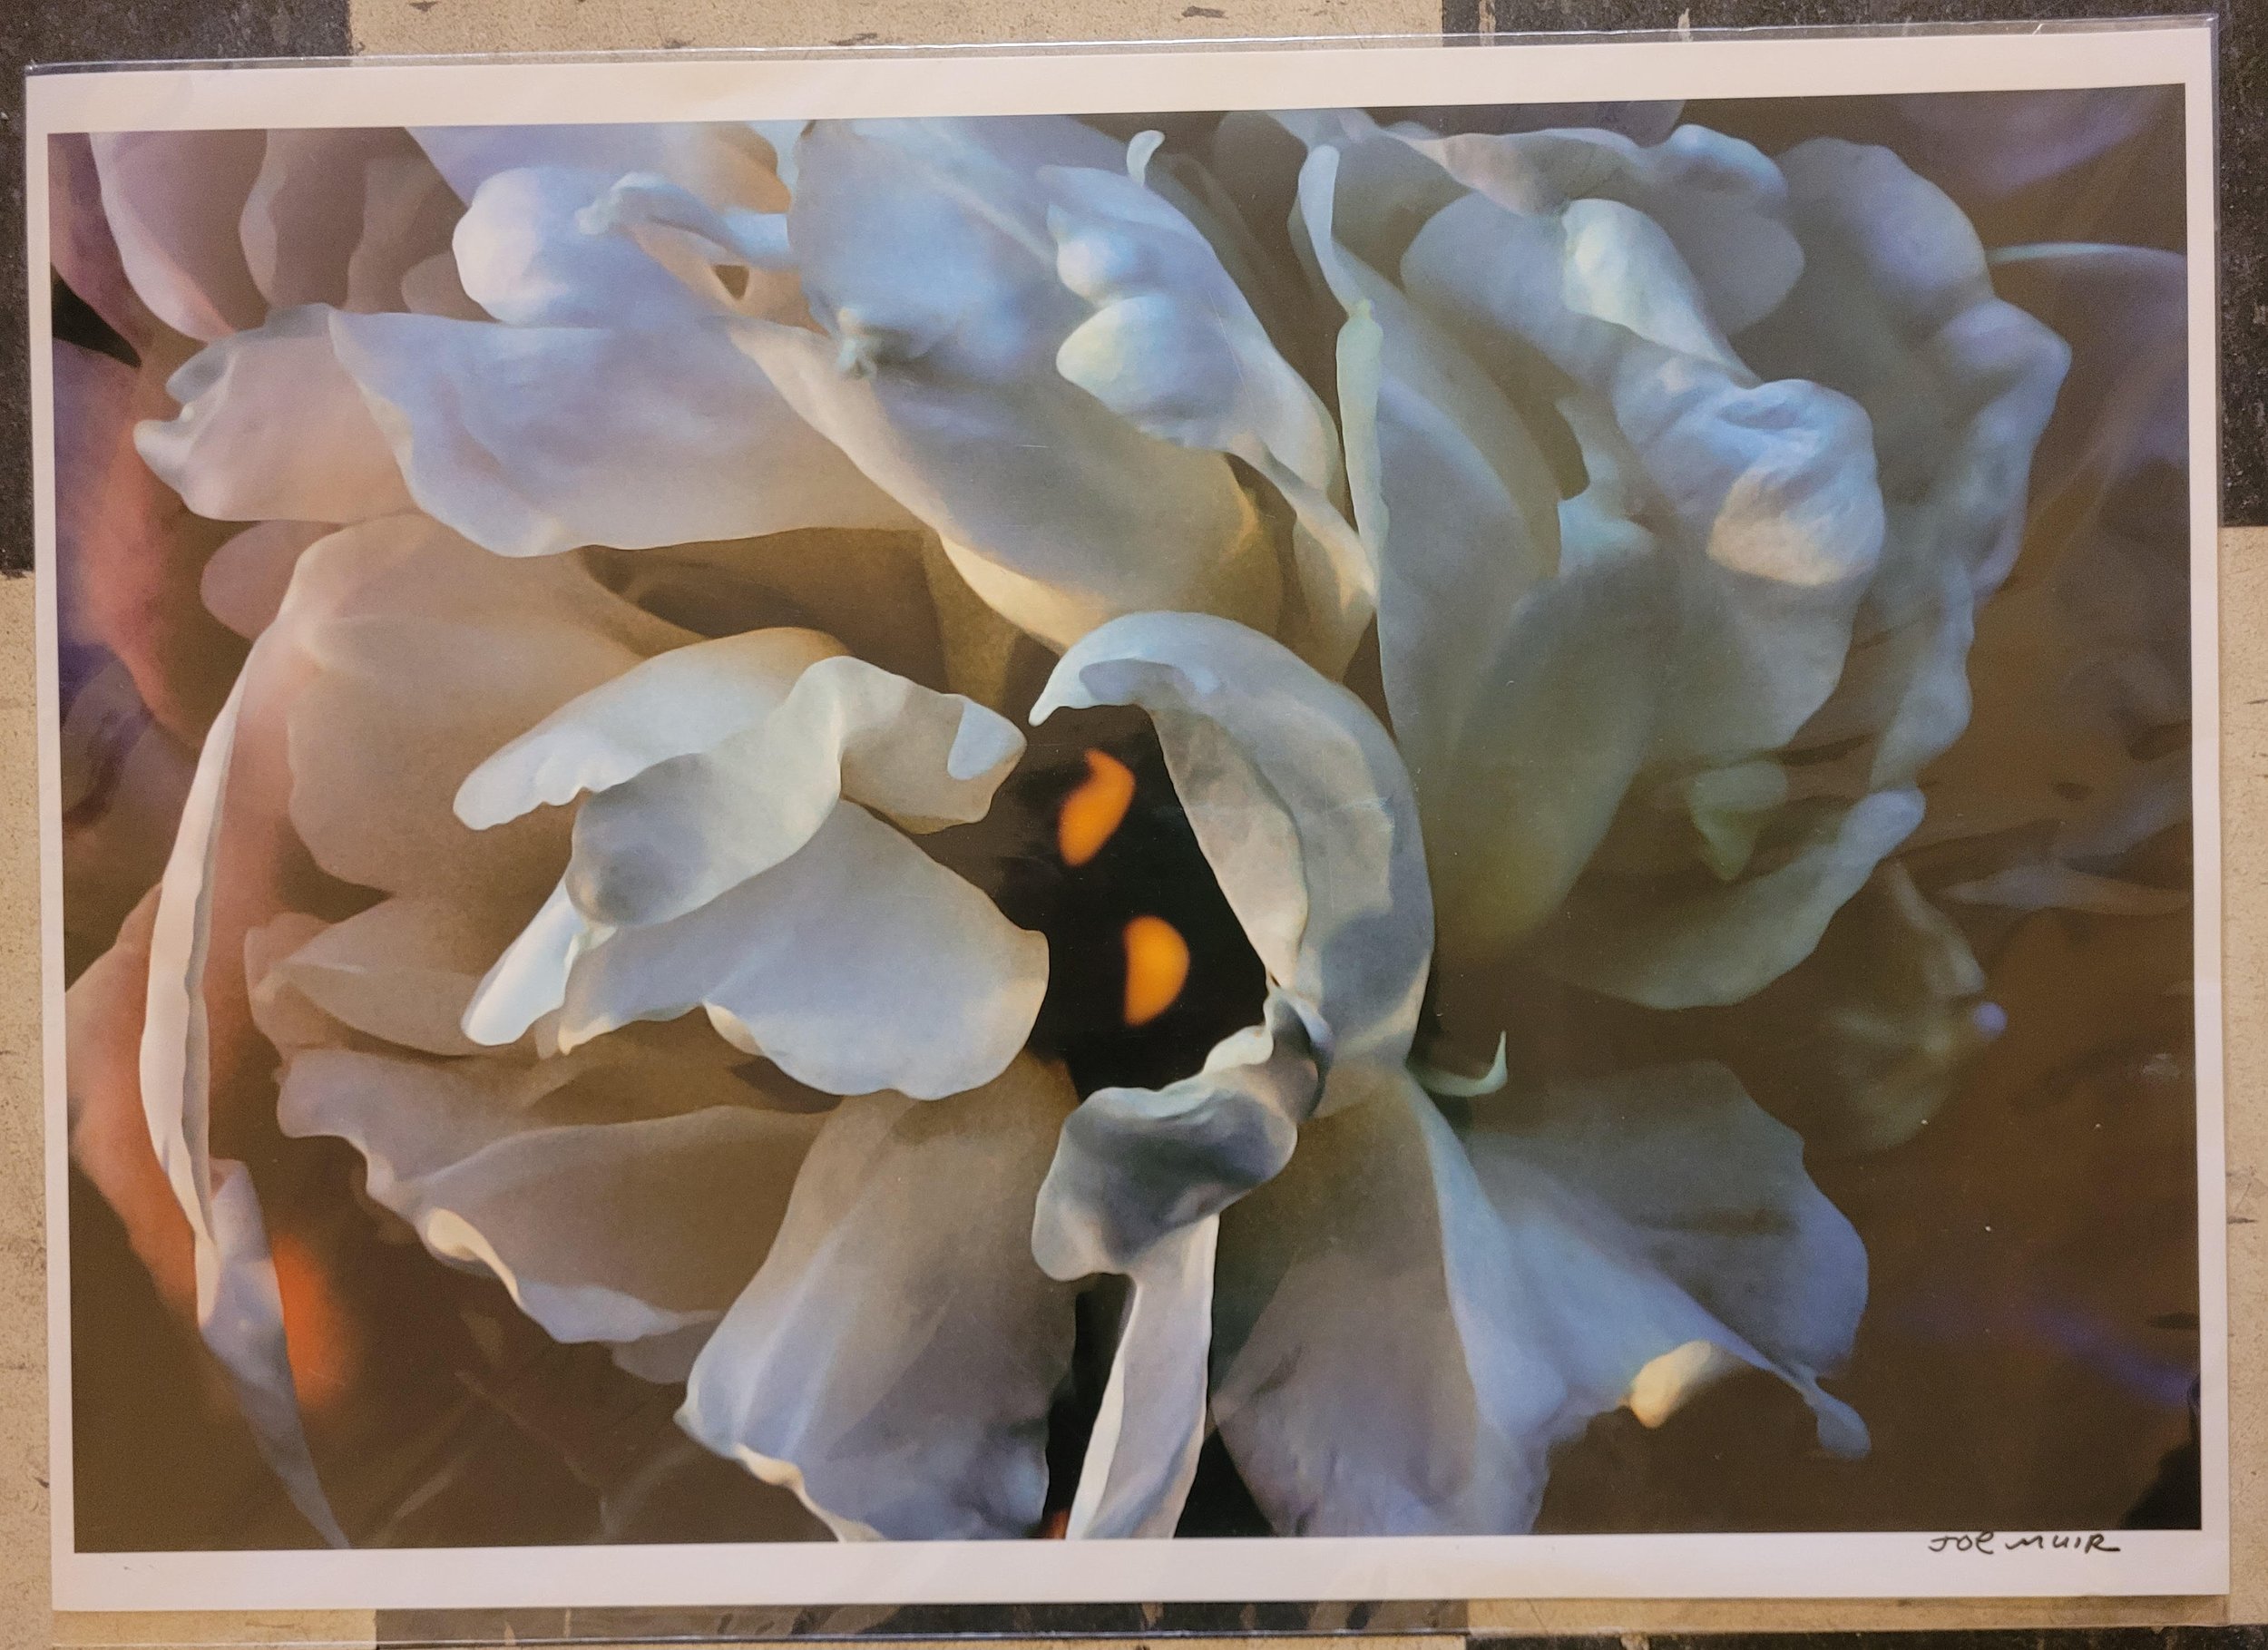  Joe Muir,  # 4,  From the Flower portfolio, 1/3, 2015-2020, Inkjet prints, 16 x 20 inches, $950. each (framed) 